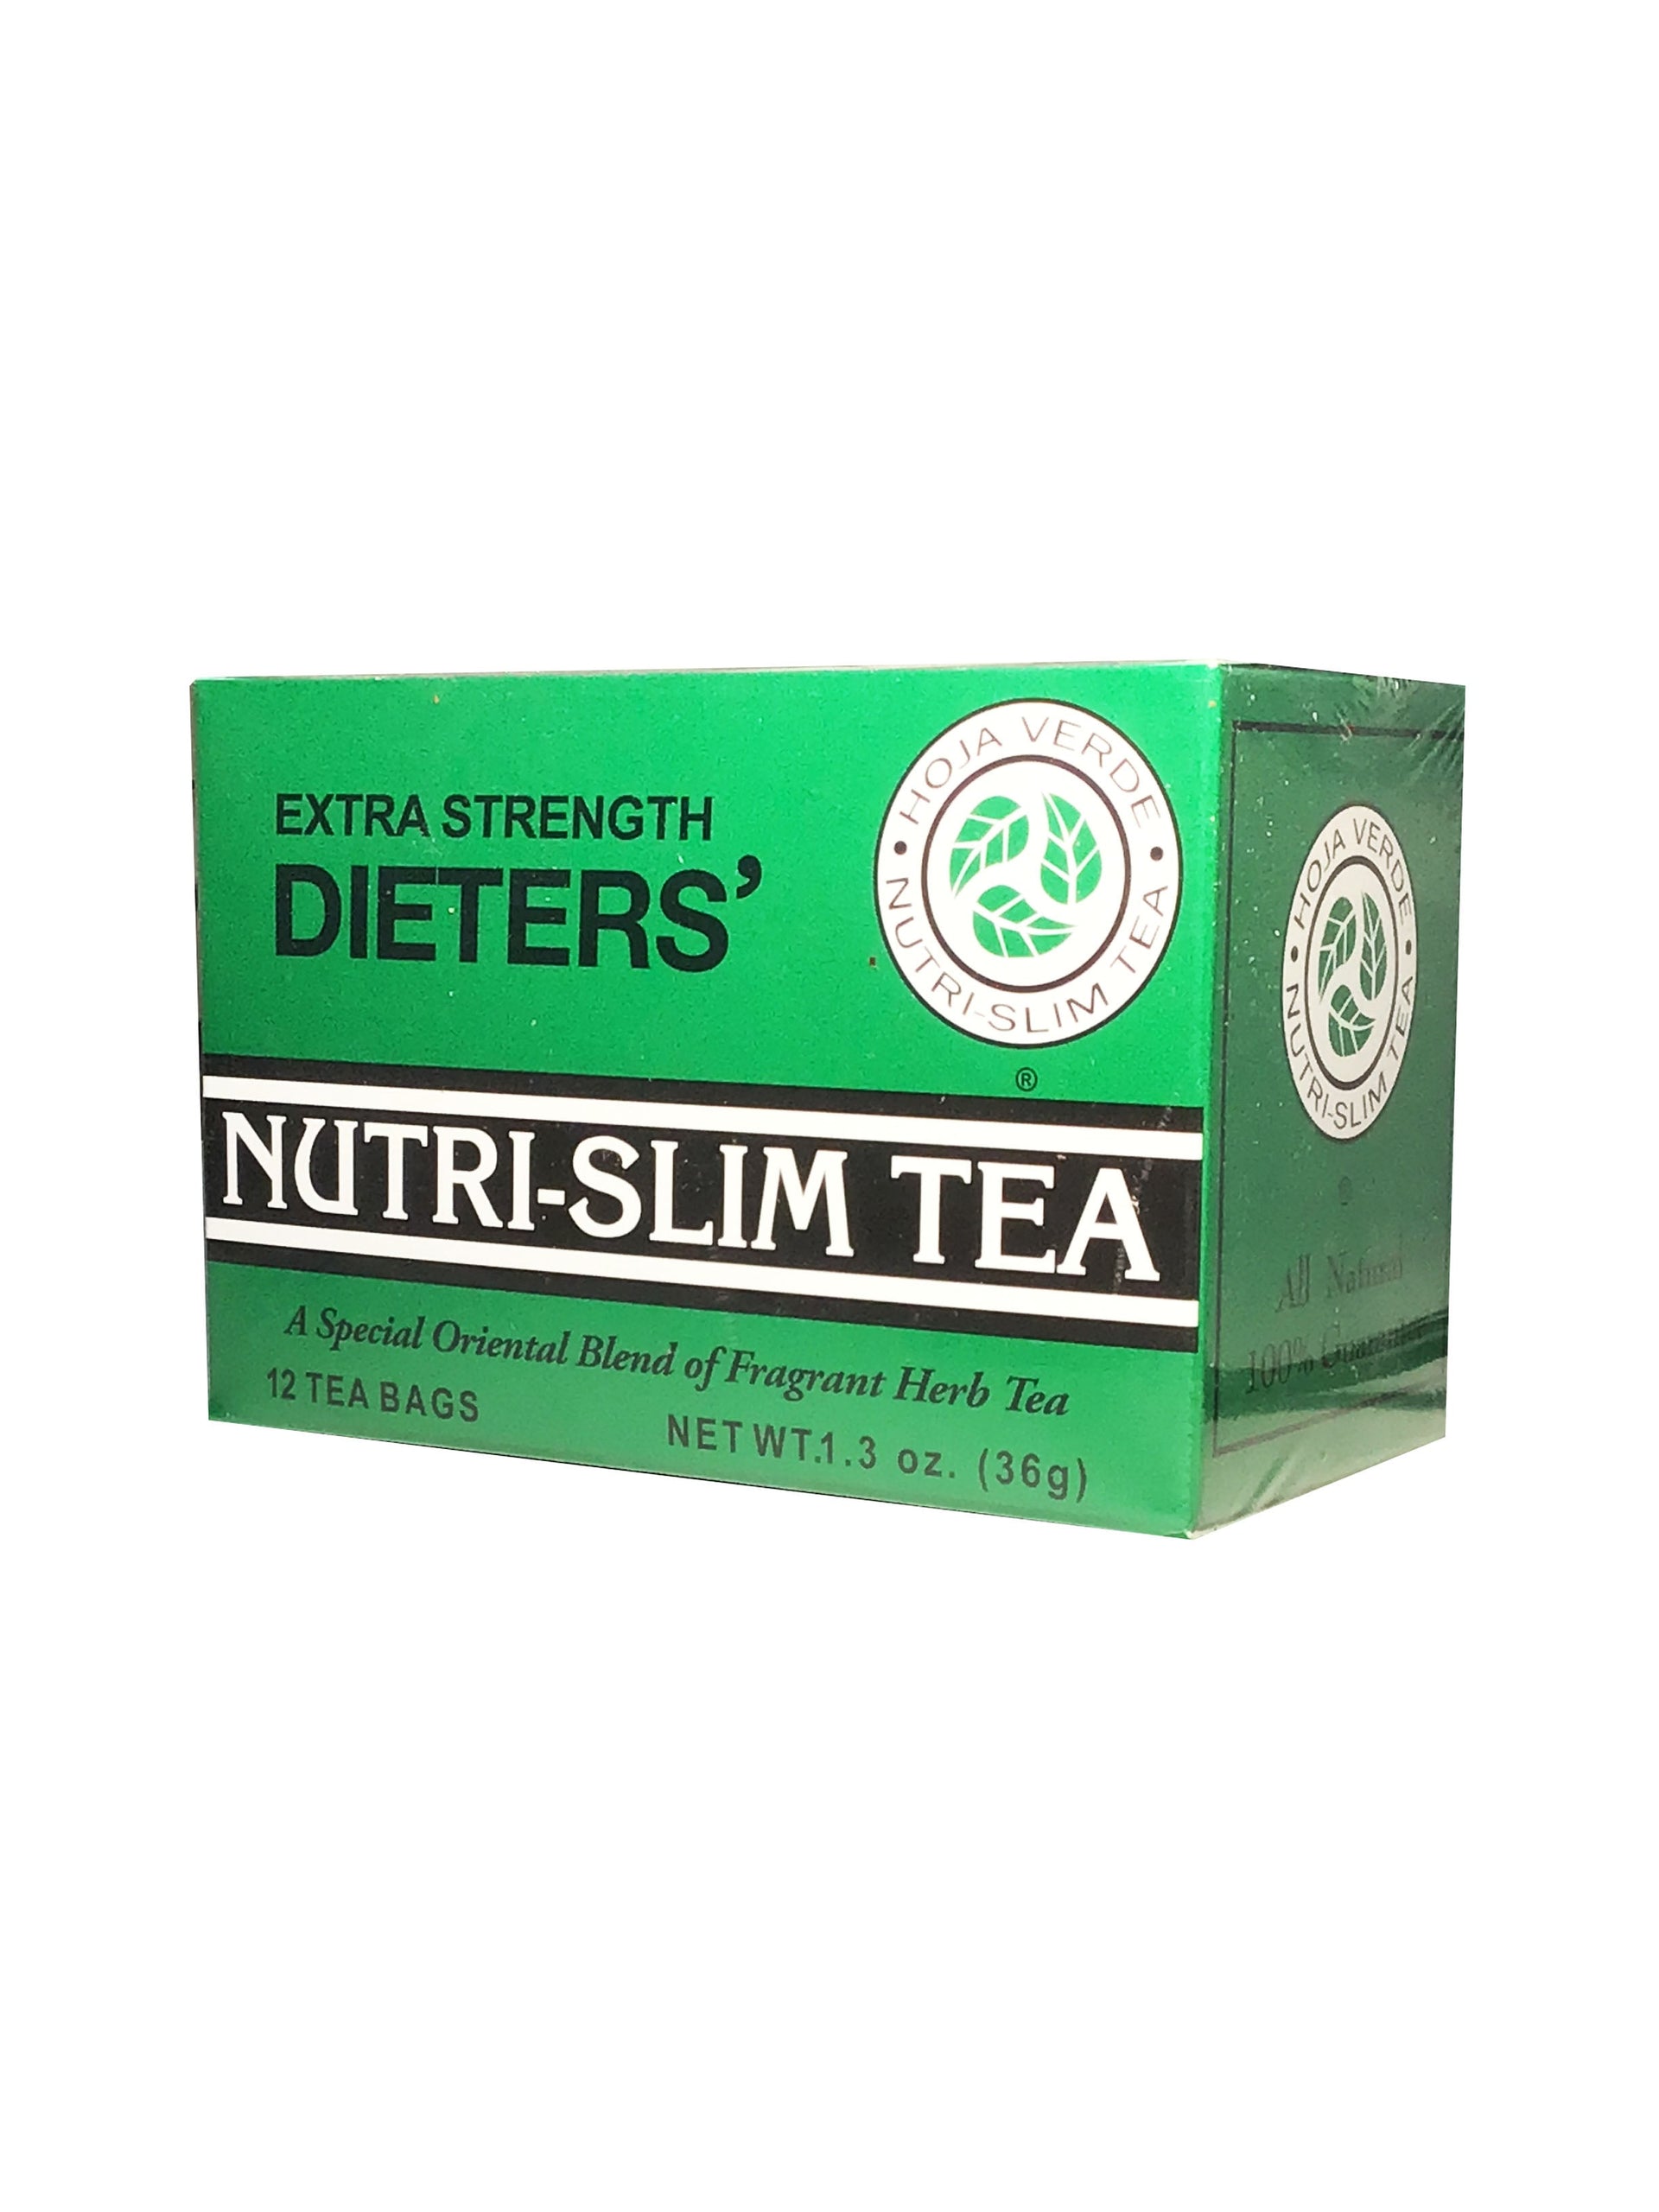 Nutri-Leaf Dieters' Slim Tea Extra Strength – Evelyn Faye Nutrition